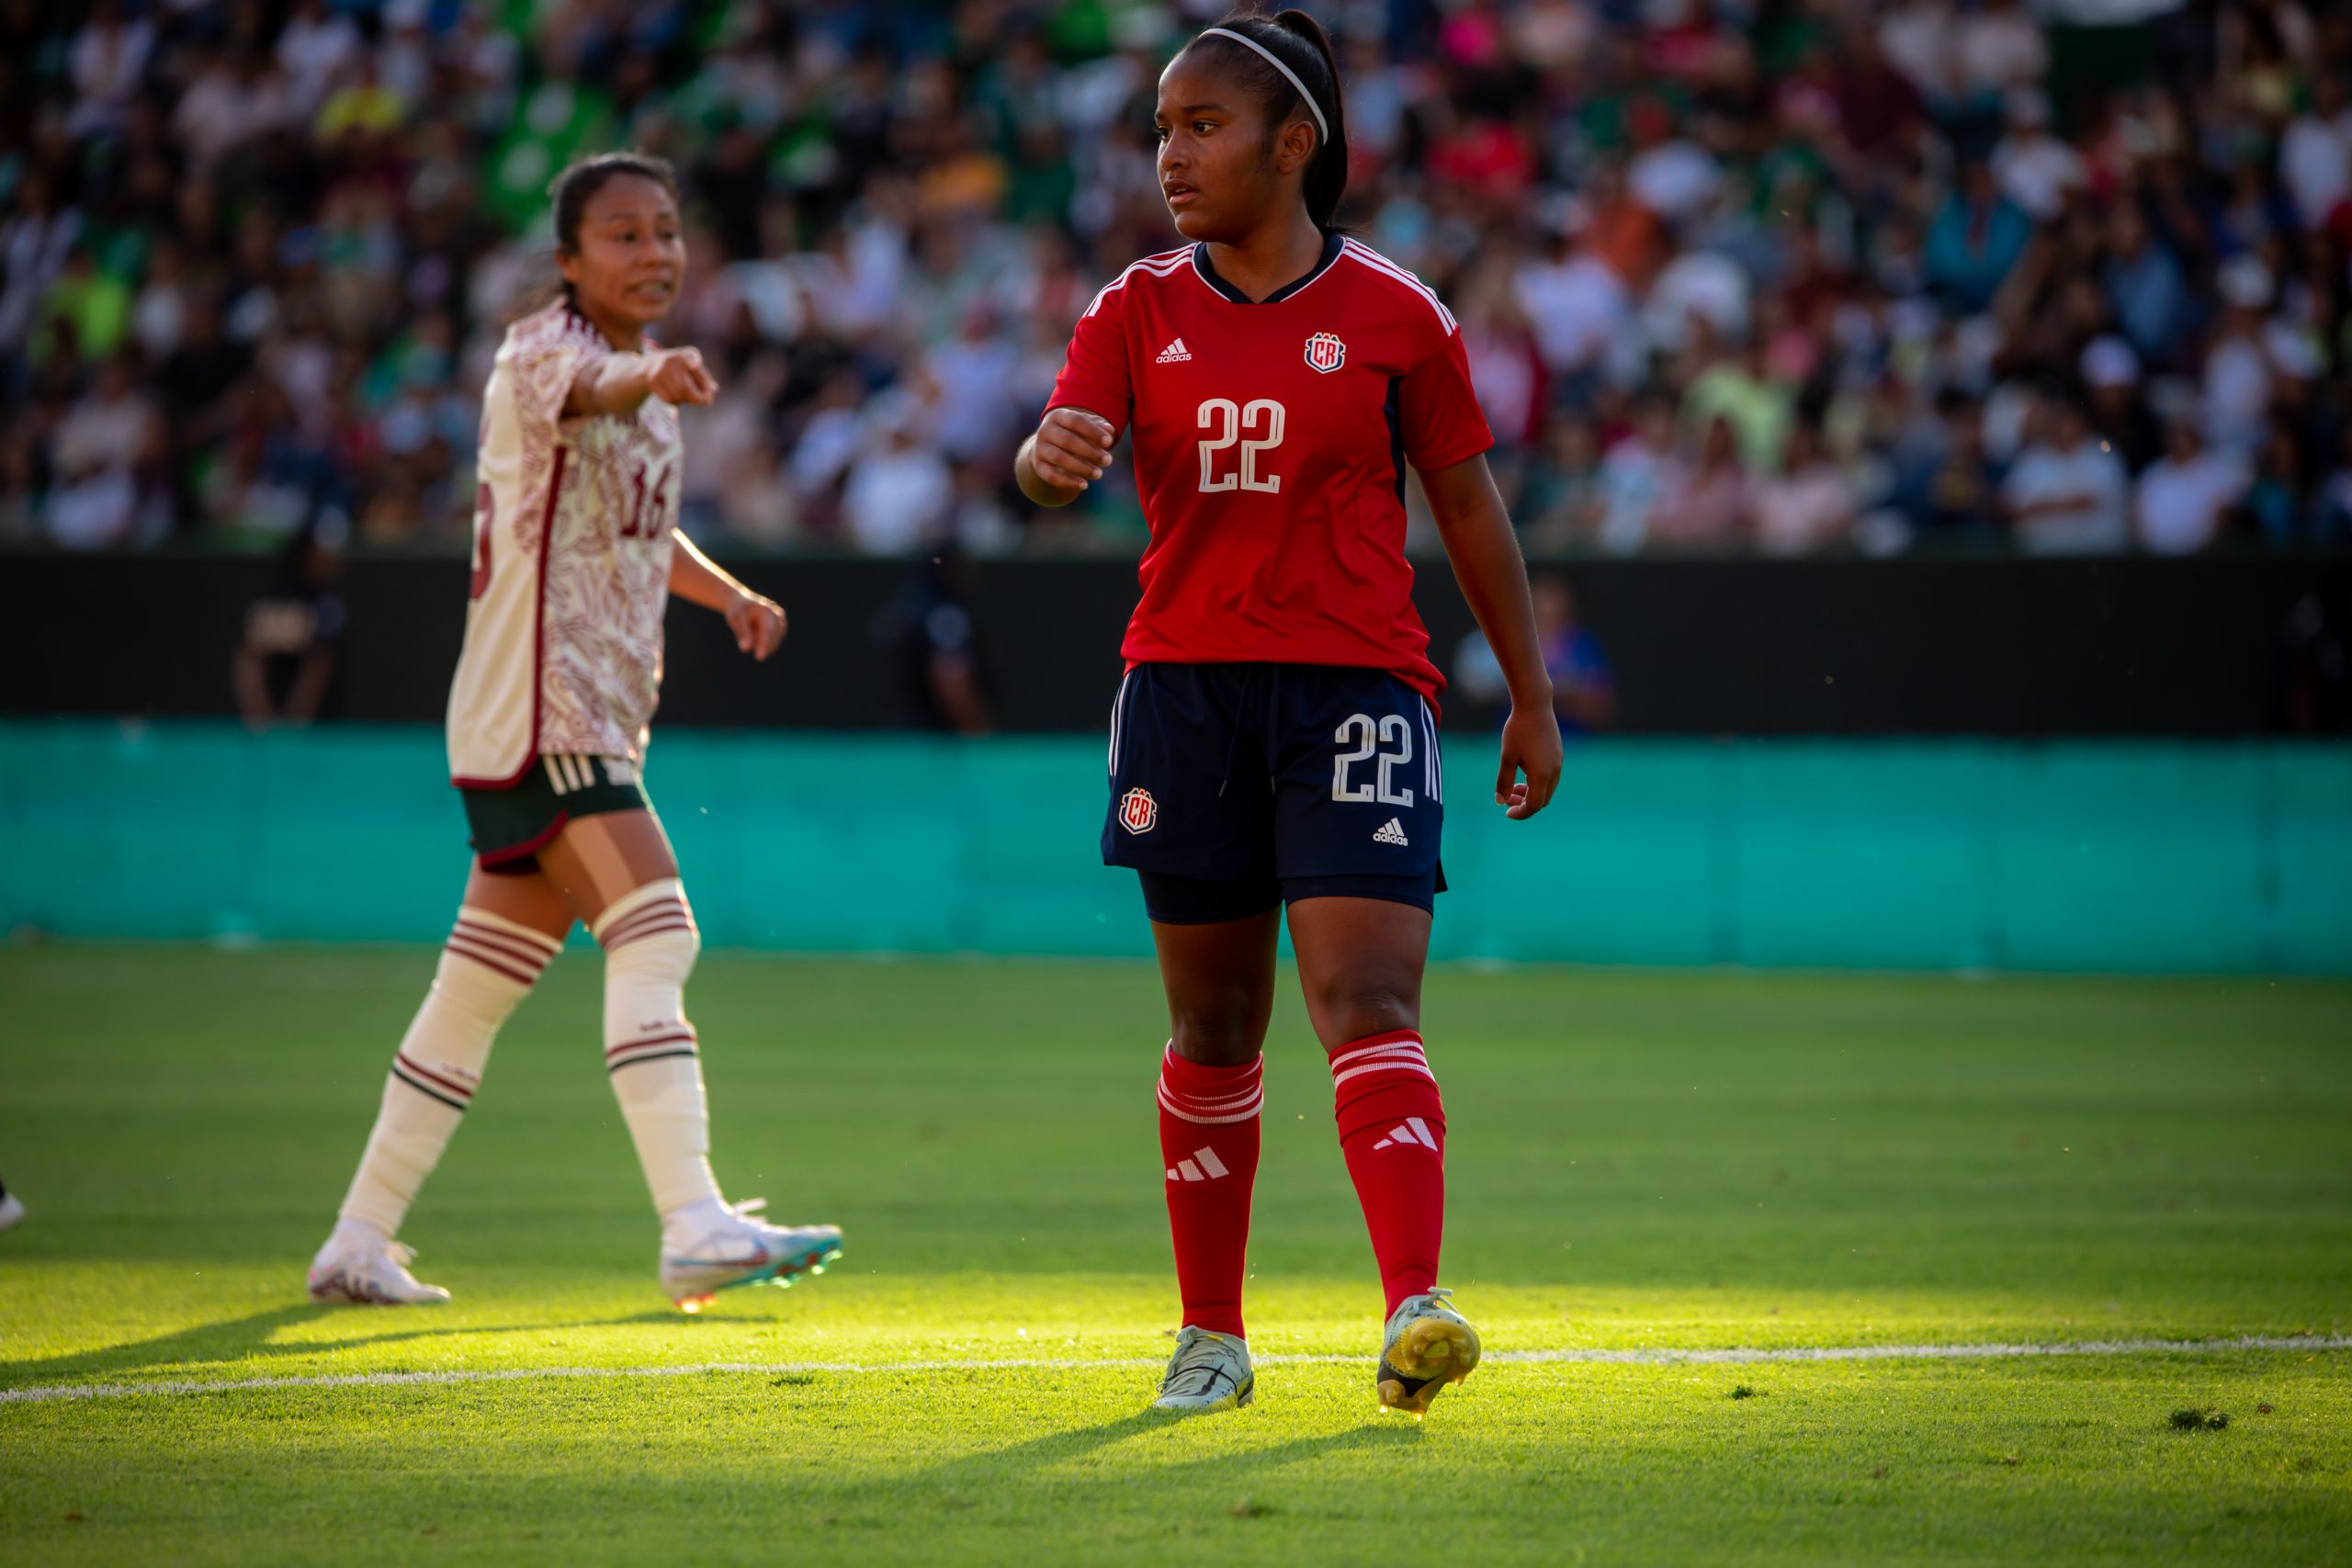 Sele Femenina Sub 20 disputará torneo de Uncaf FIFA Forward en Honduras